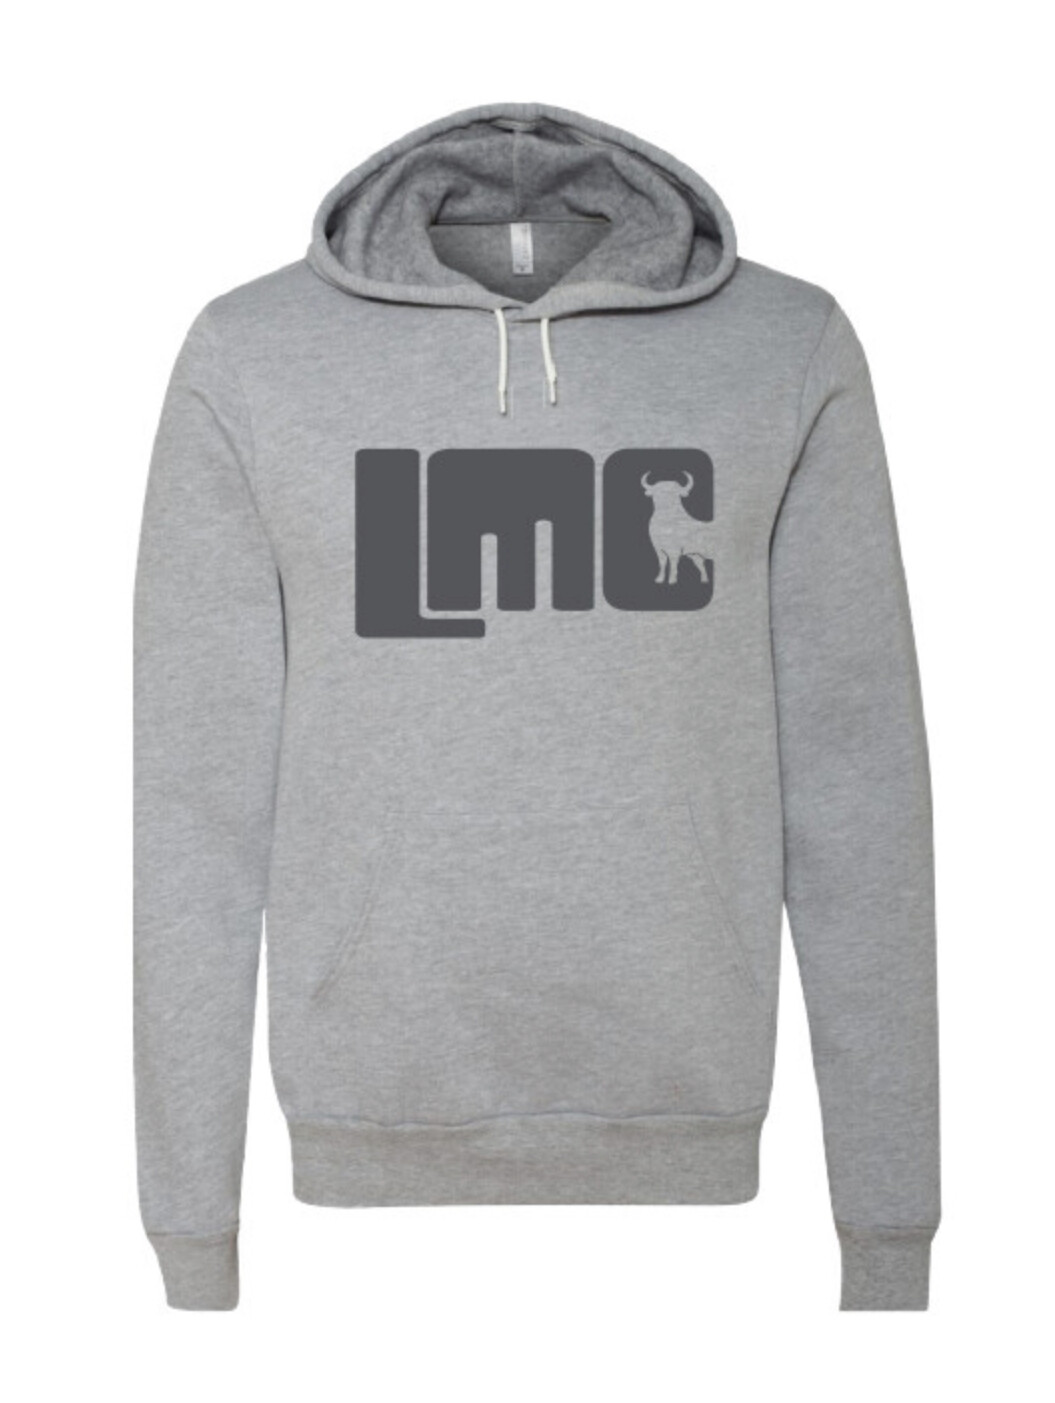 LMC Gray Hoodie with Dark Gray Logo-Adult-Large